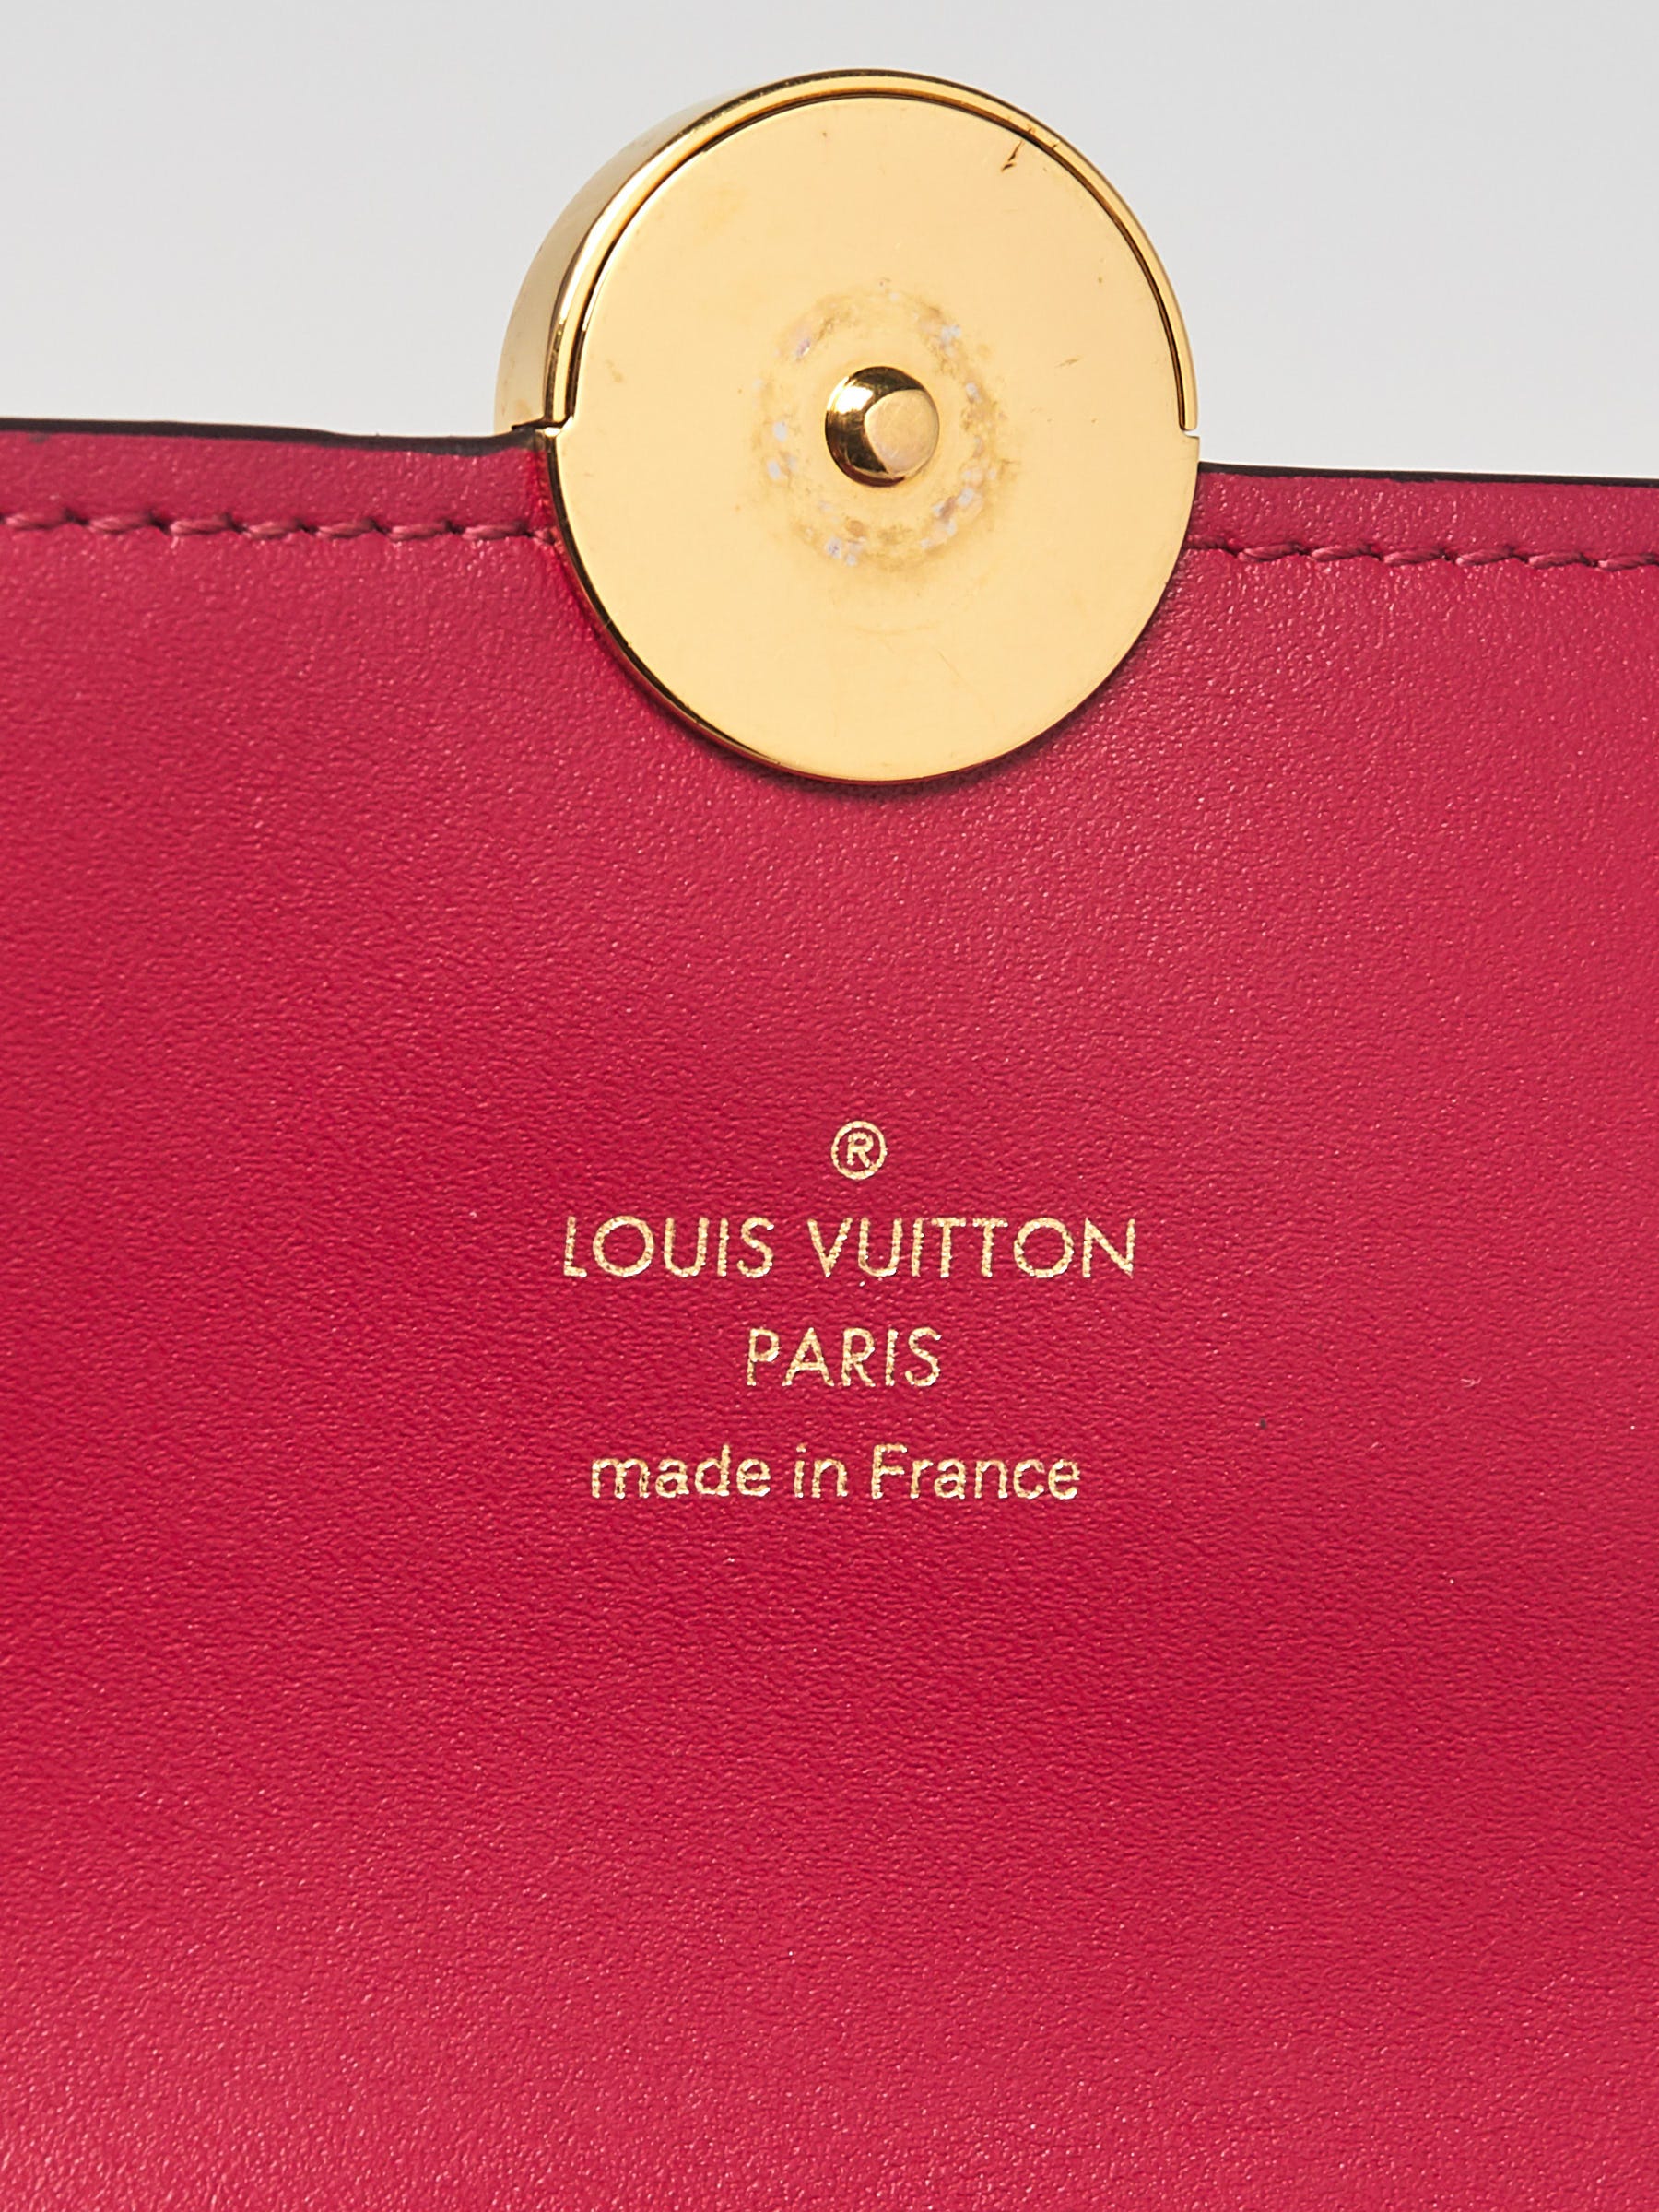 Louis Vuitton Fuchsia Monogram Canvas Flore Chain Wallet Bag